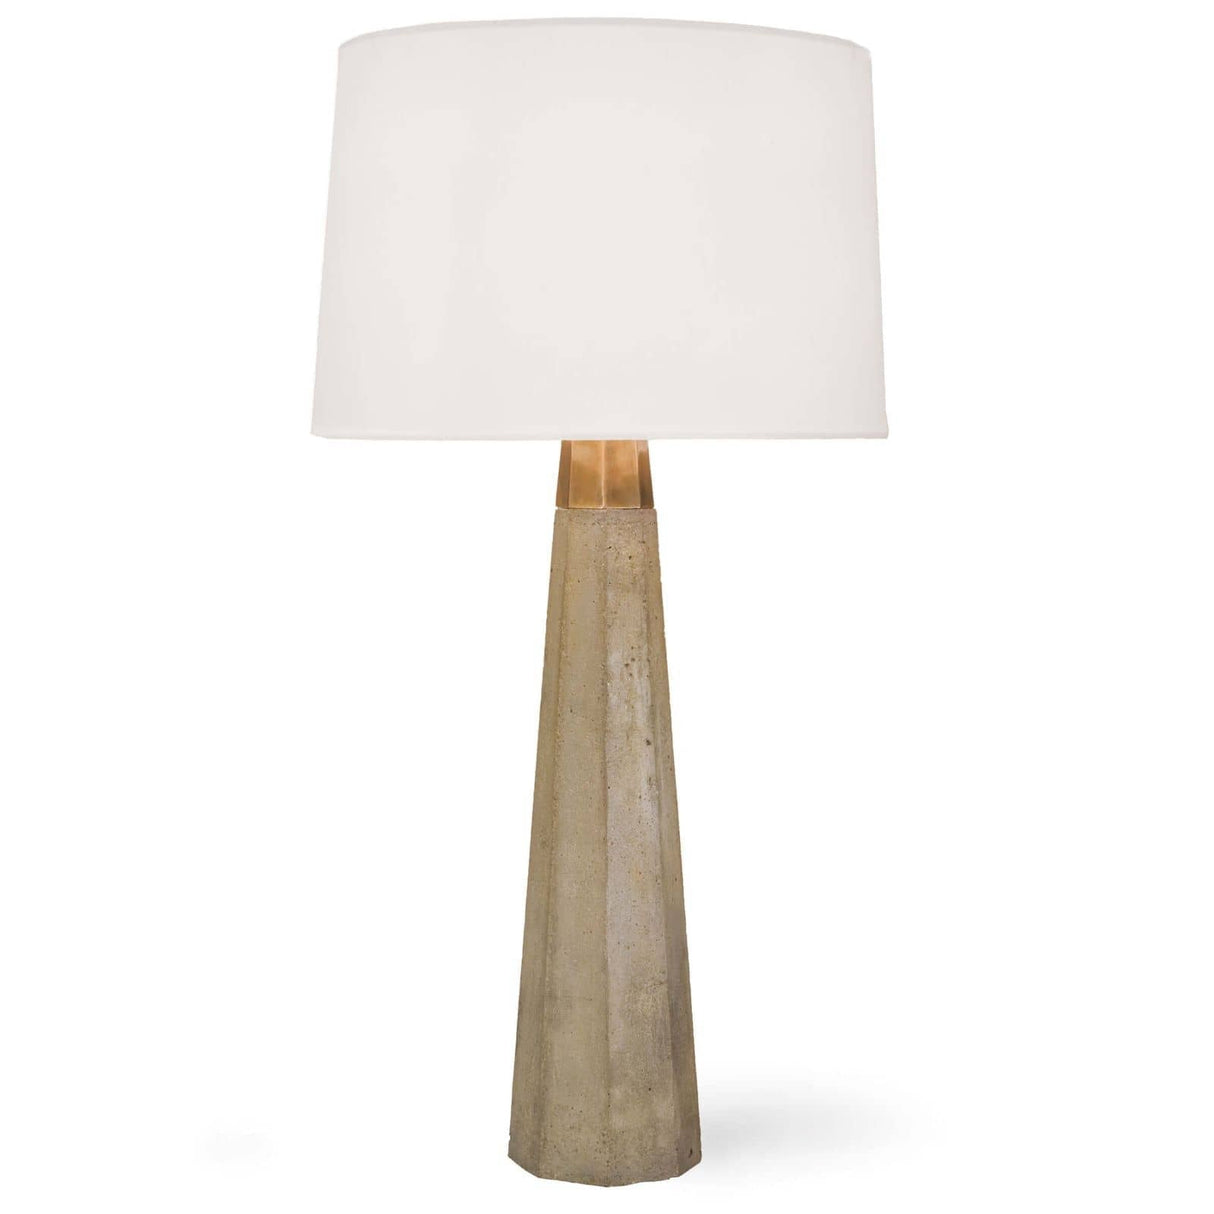 Regina Andrew Concrete and Brass Table Lamp Lighting regina-andrew-13-1051 844717012211